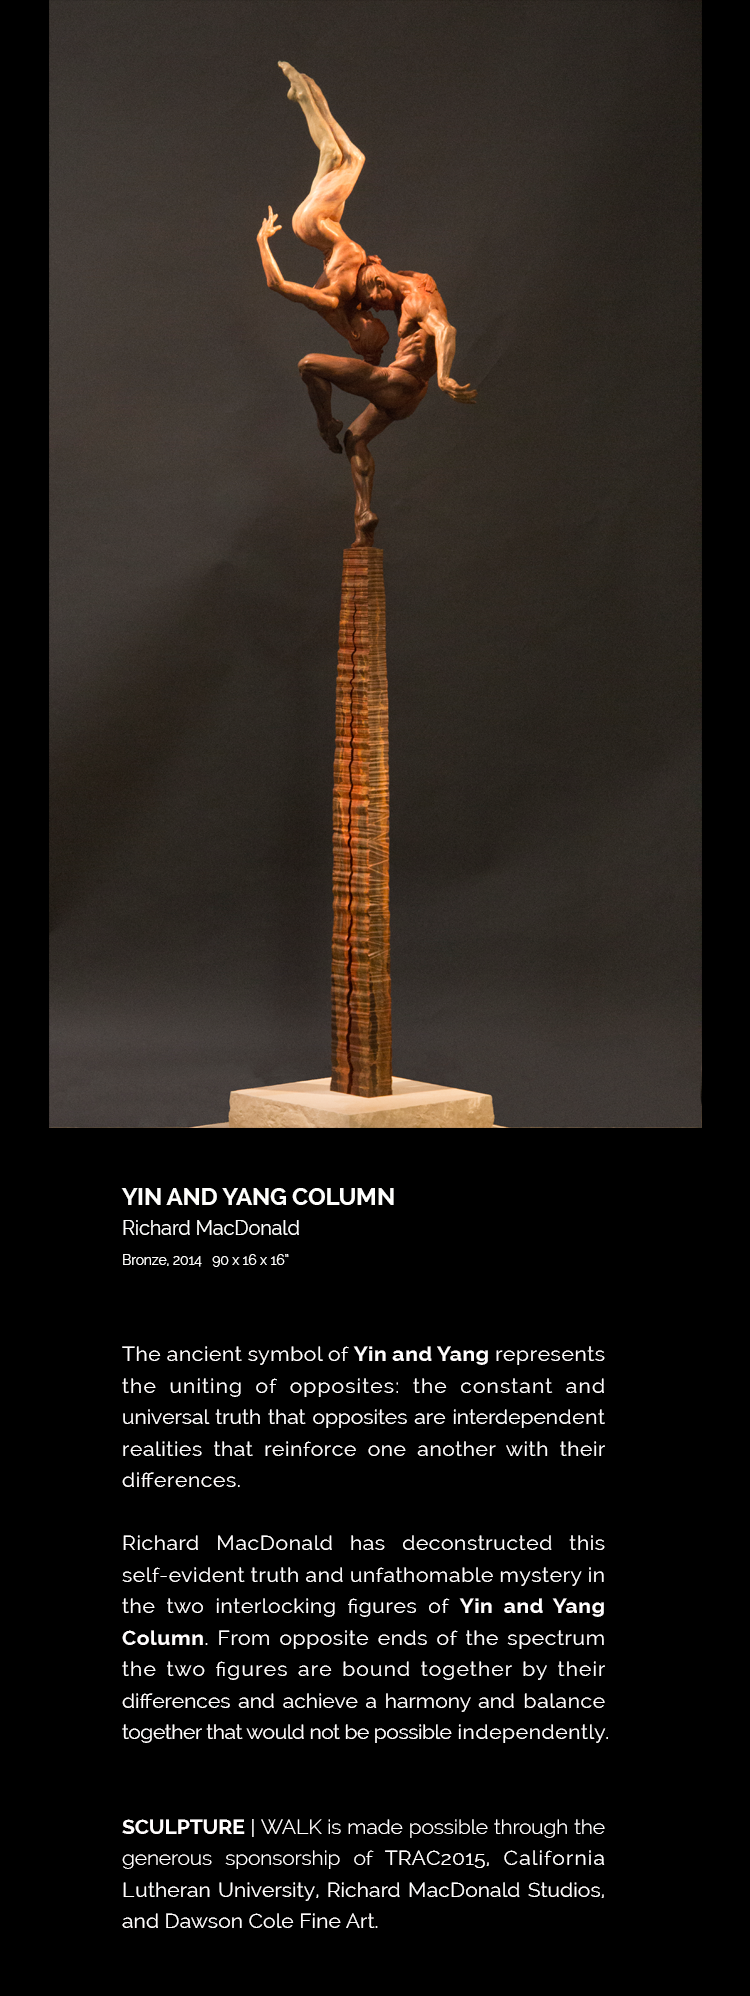 Yin and Yang Column by Richard MacDonald